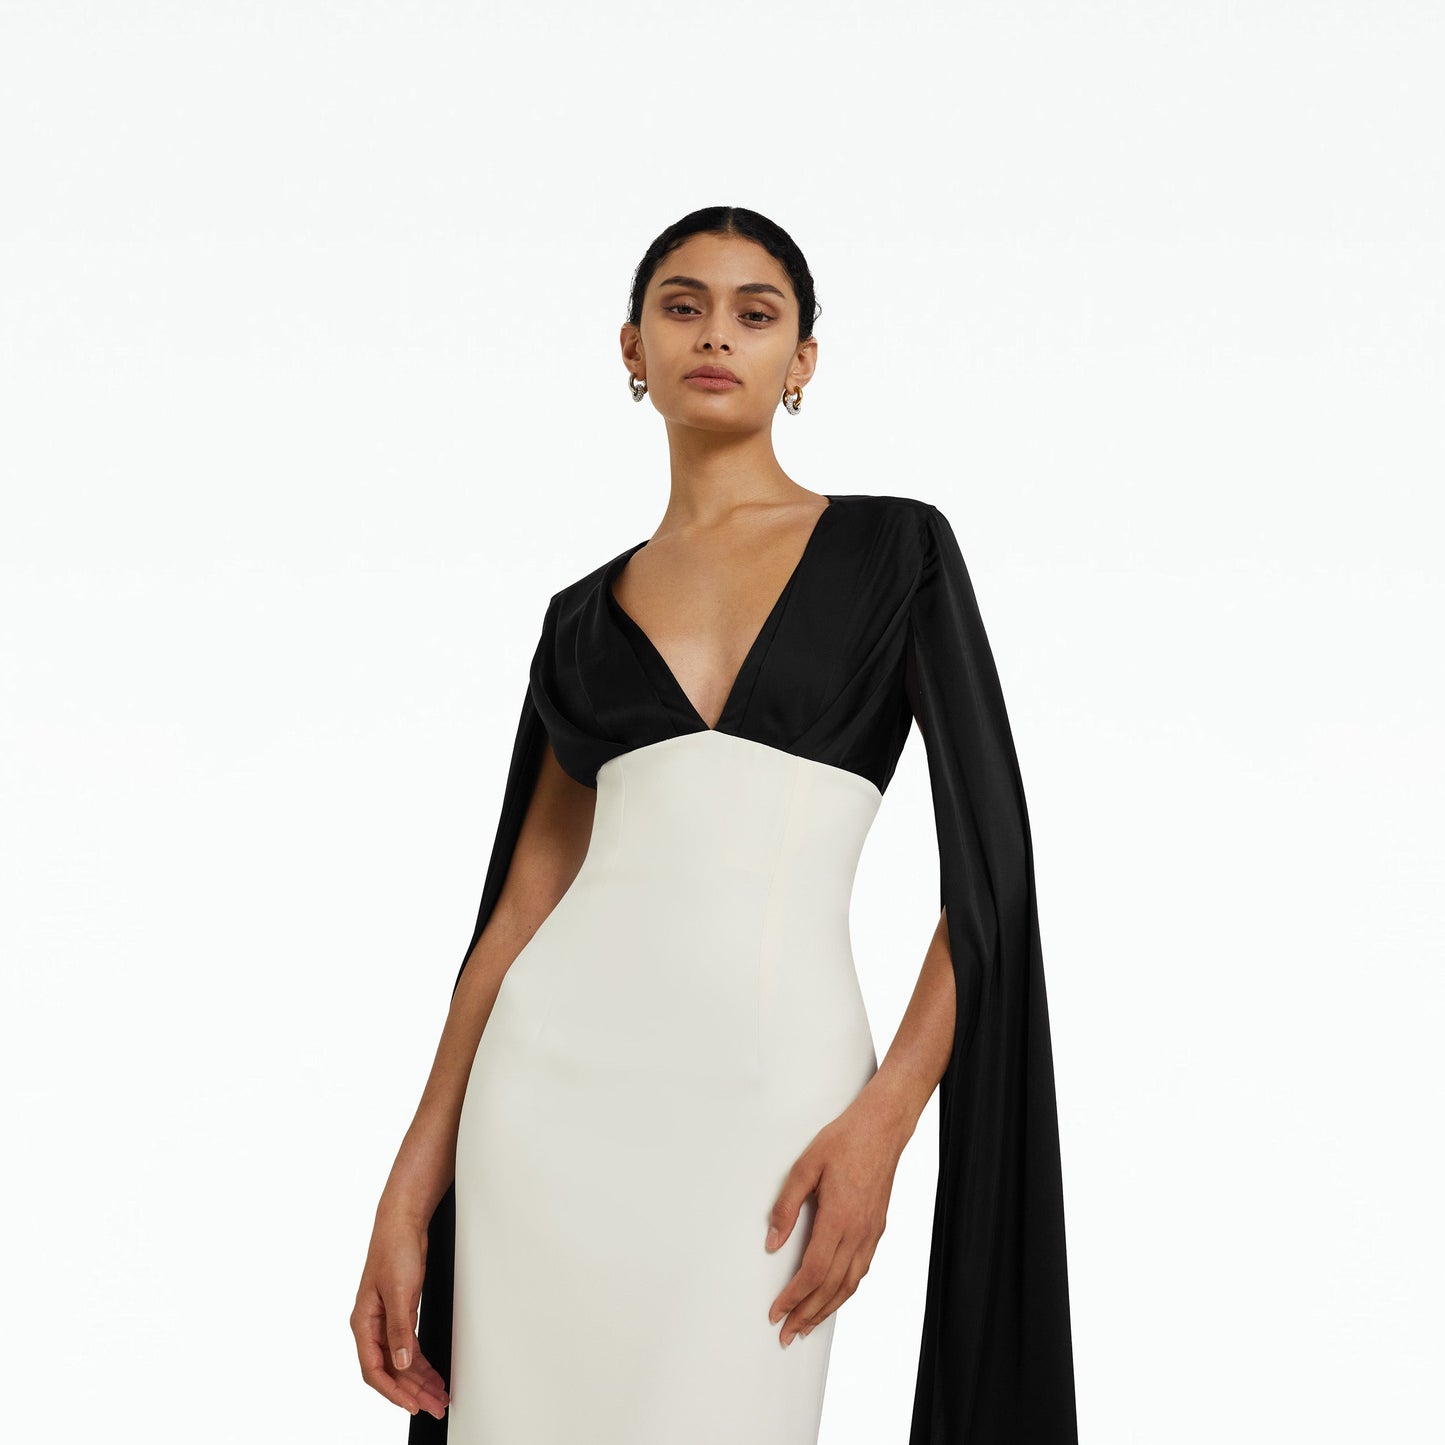 Angelina Ivory & Black Long Dress